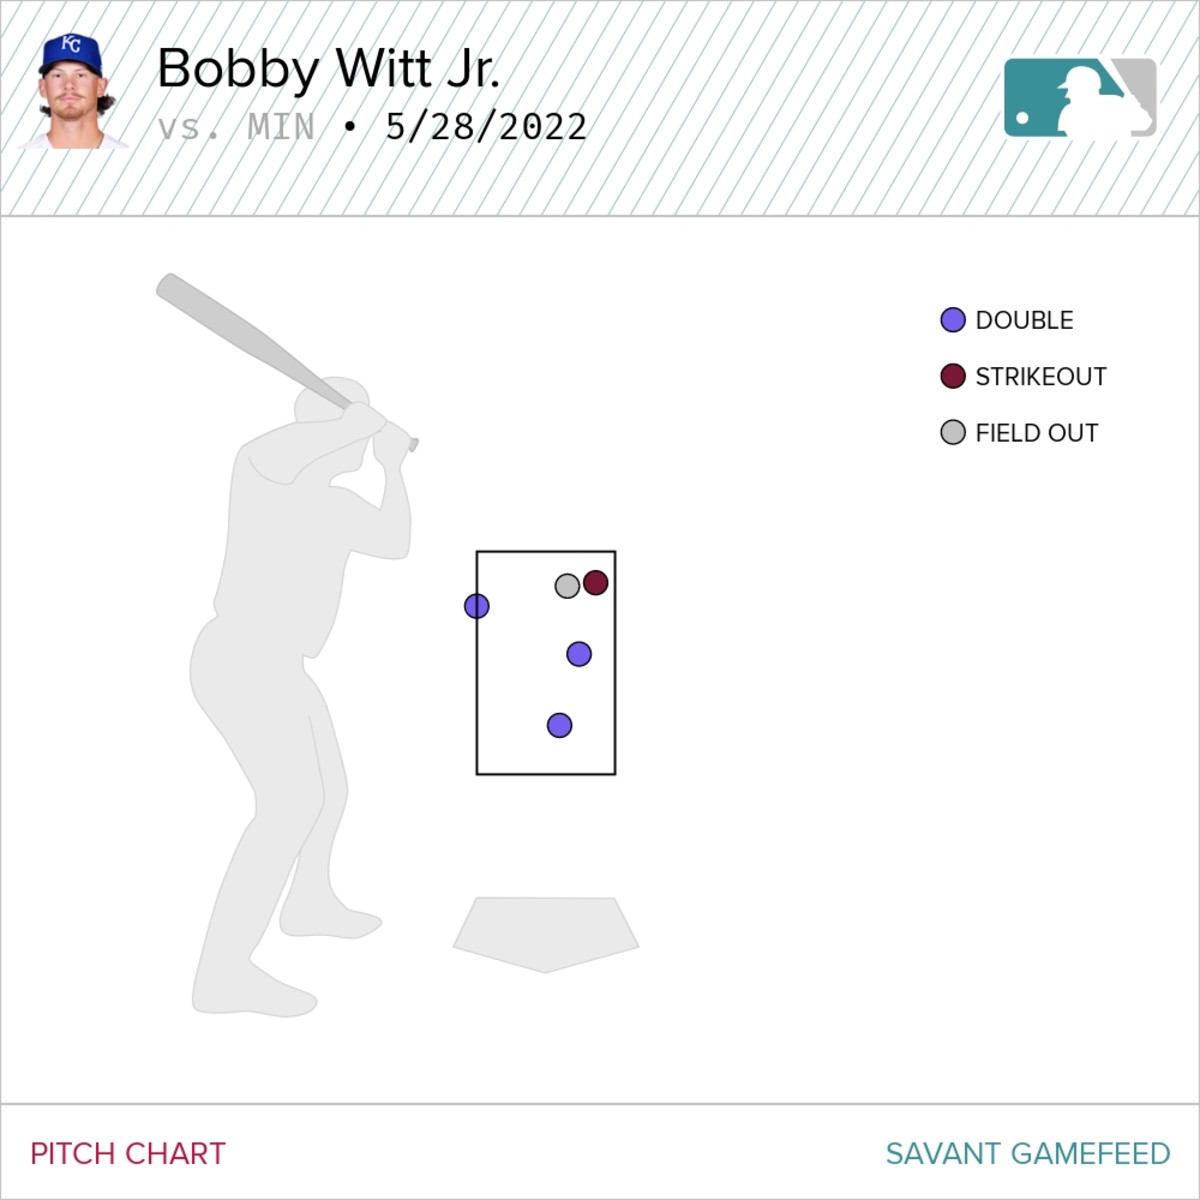 Bobby Witt Jr.'s pitch chart vs. the Minnesota Twins 05/28/22, via Baseball Savant.